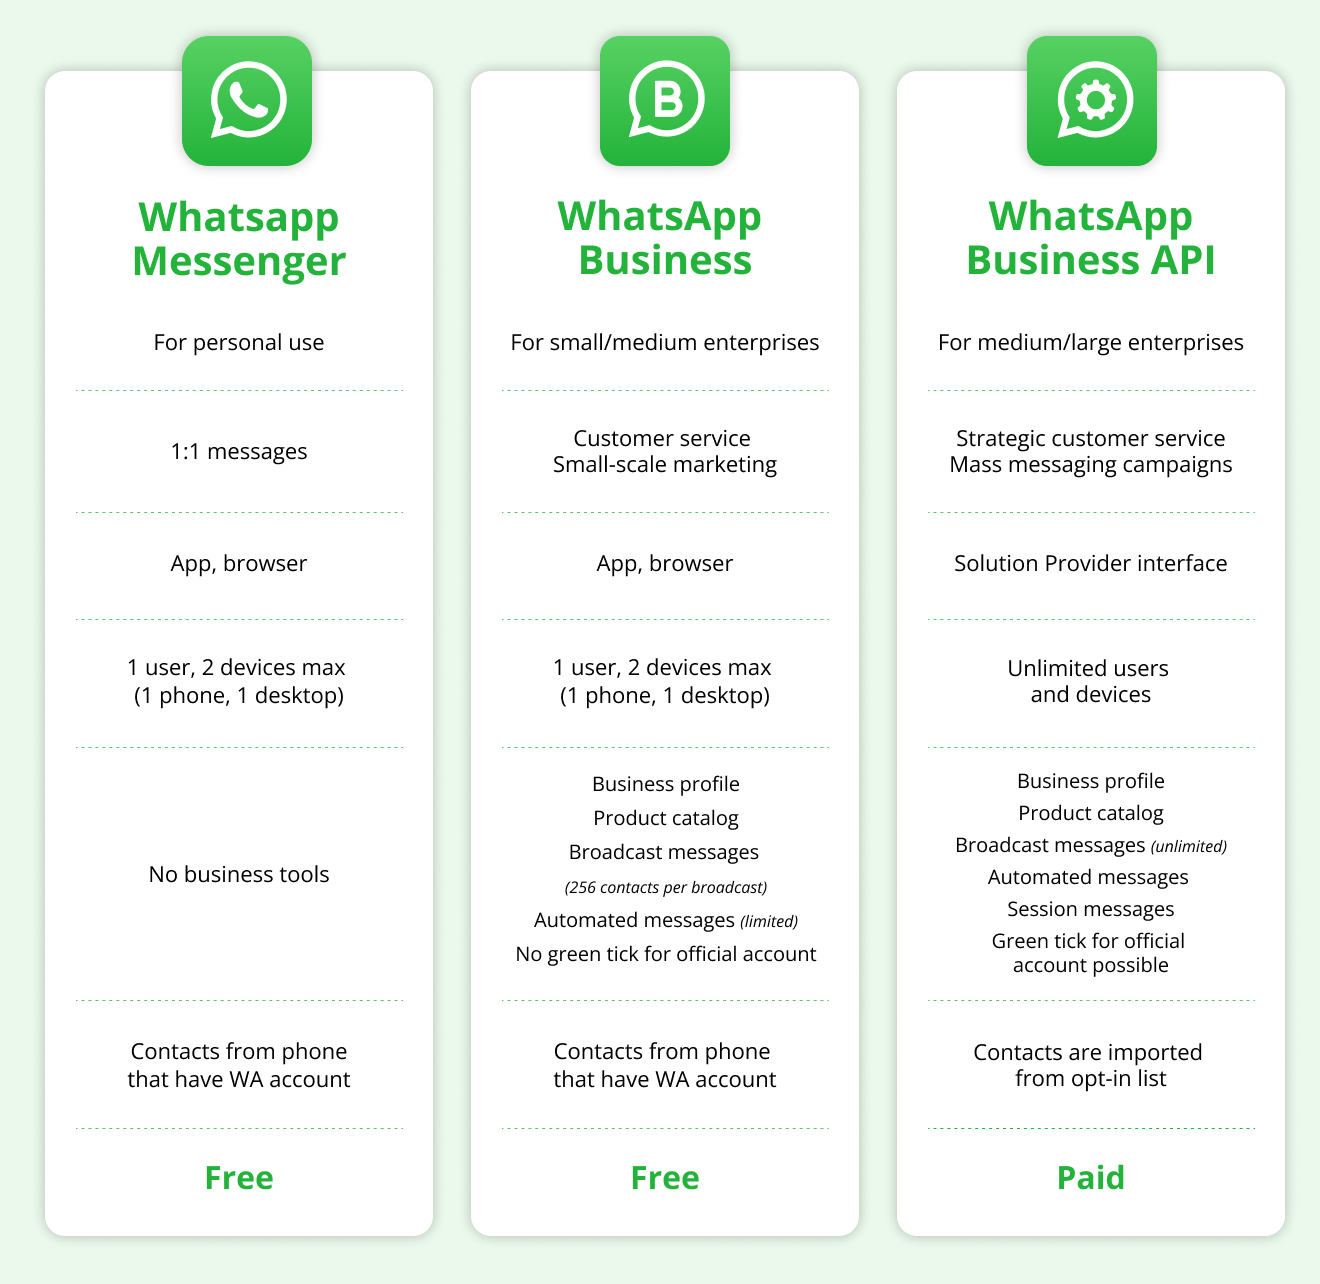 WhatsApp Duel: Business vs. API